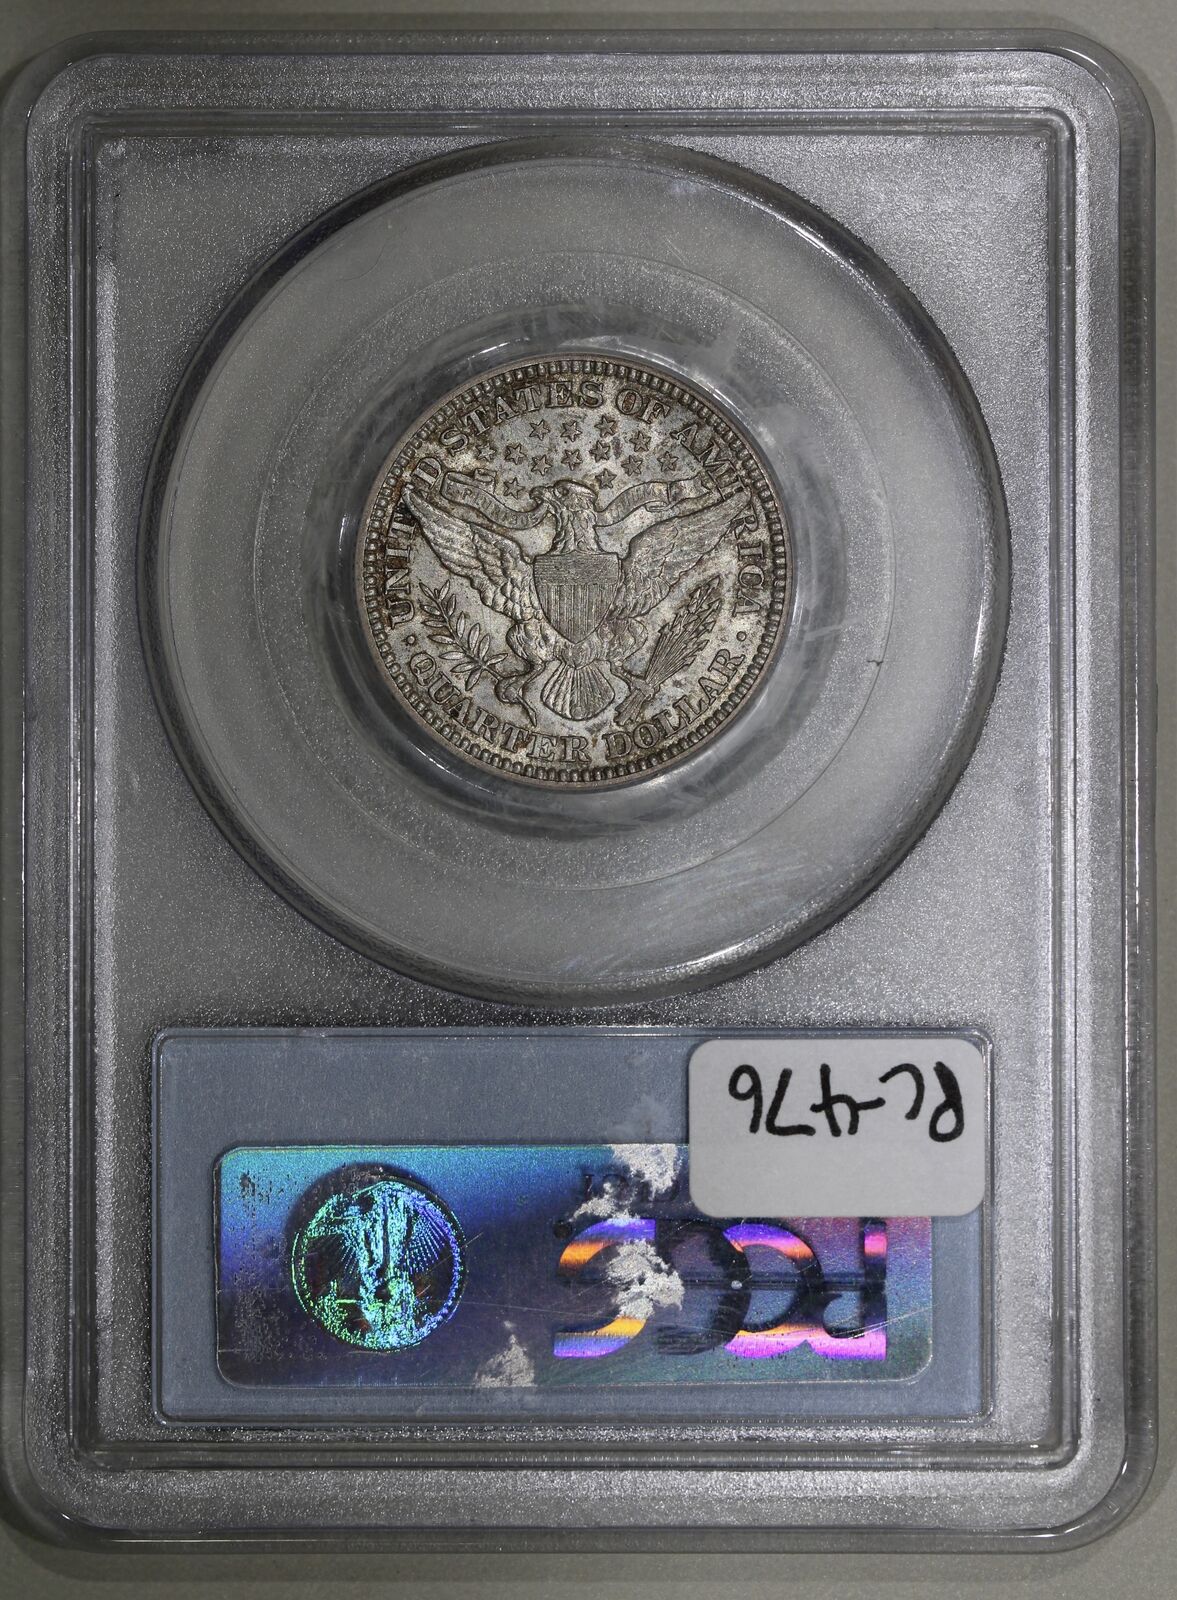 1916 (MS61 CAC) Barber Quarter 25c PCGS Graded Coin